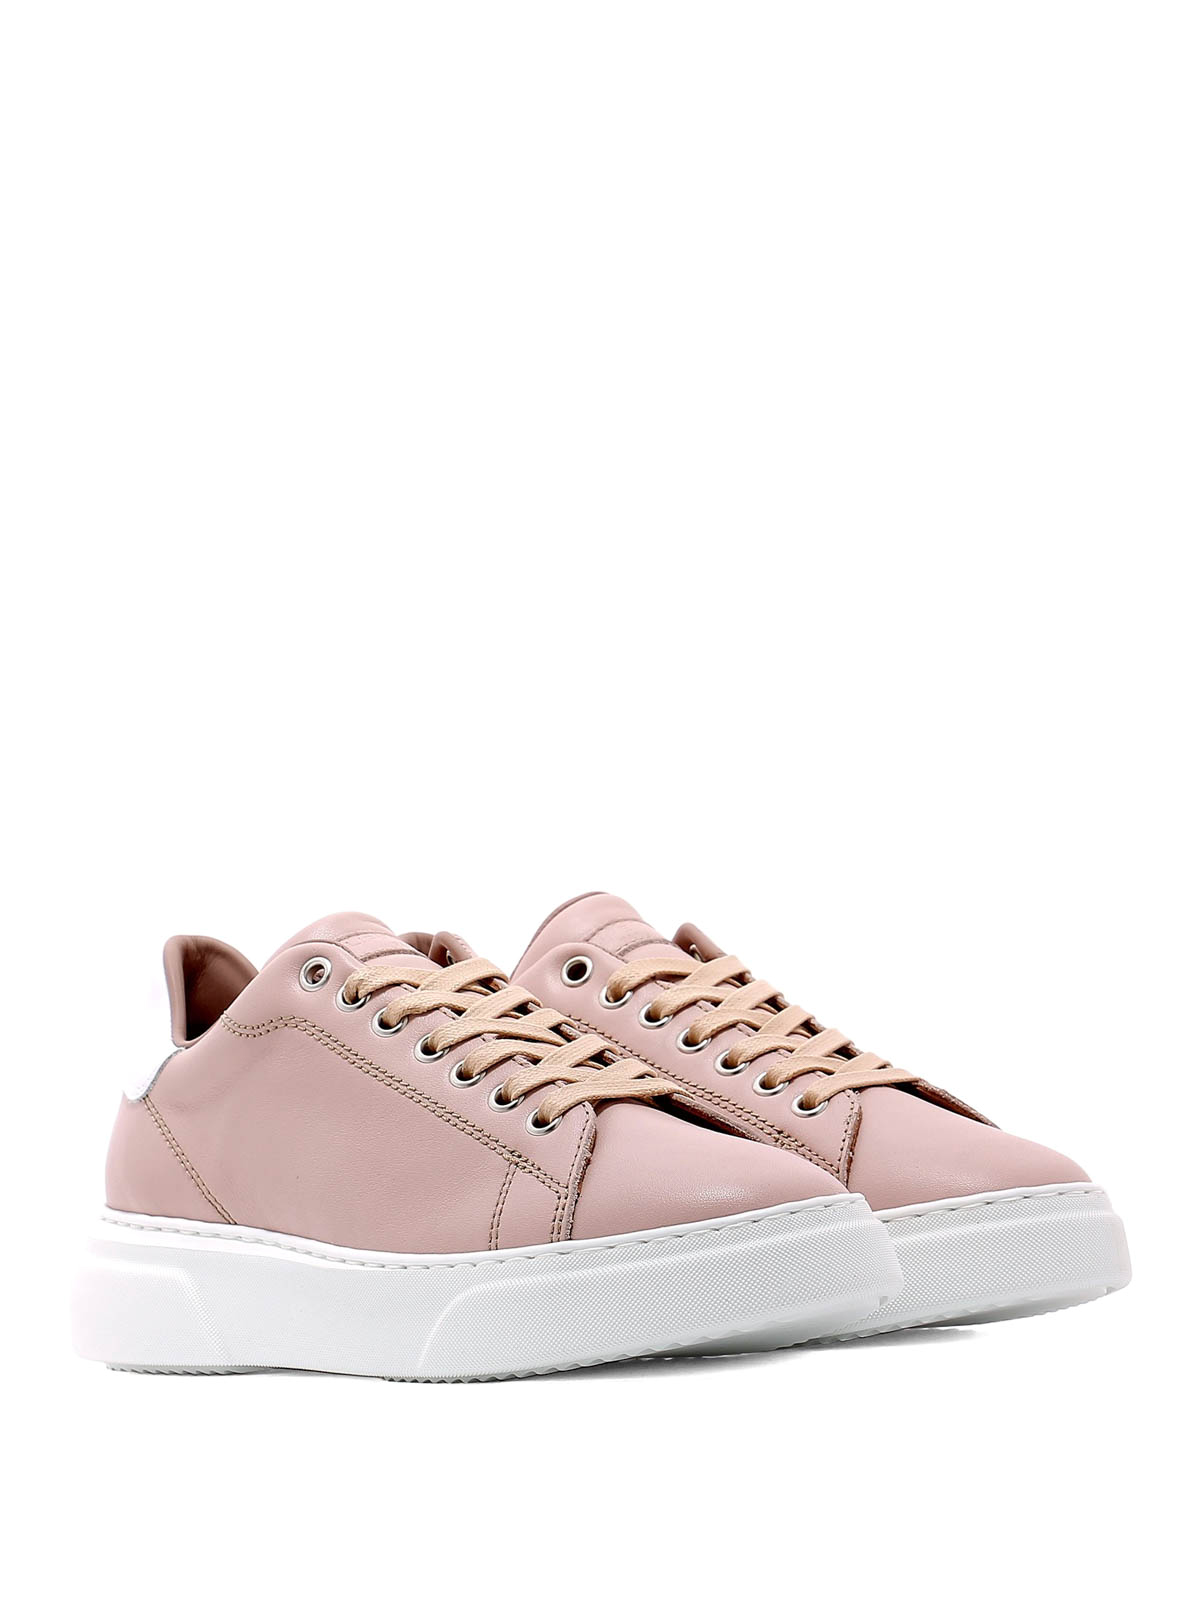 Philippe Model - Sneaker Temple in pelle rosa antico - sneakers - BPLDV003